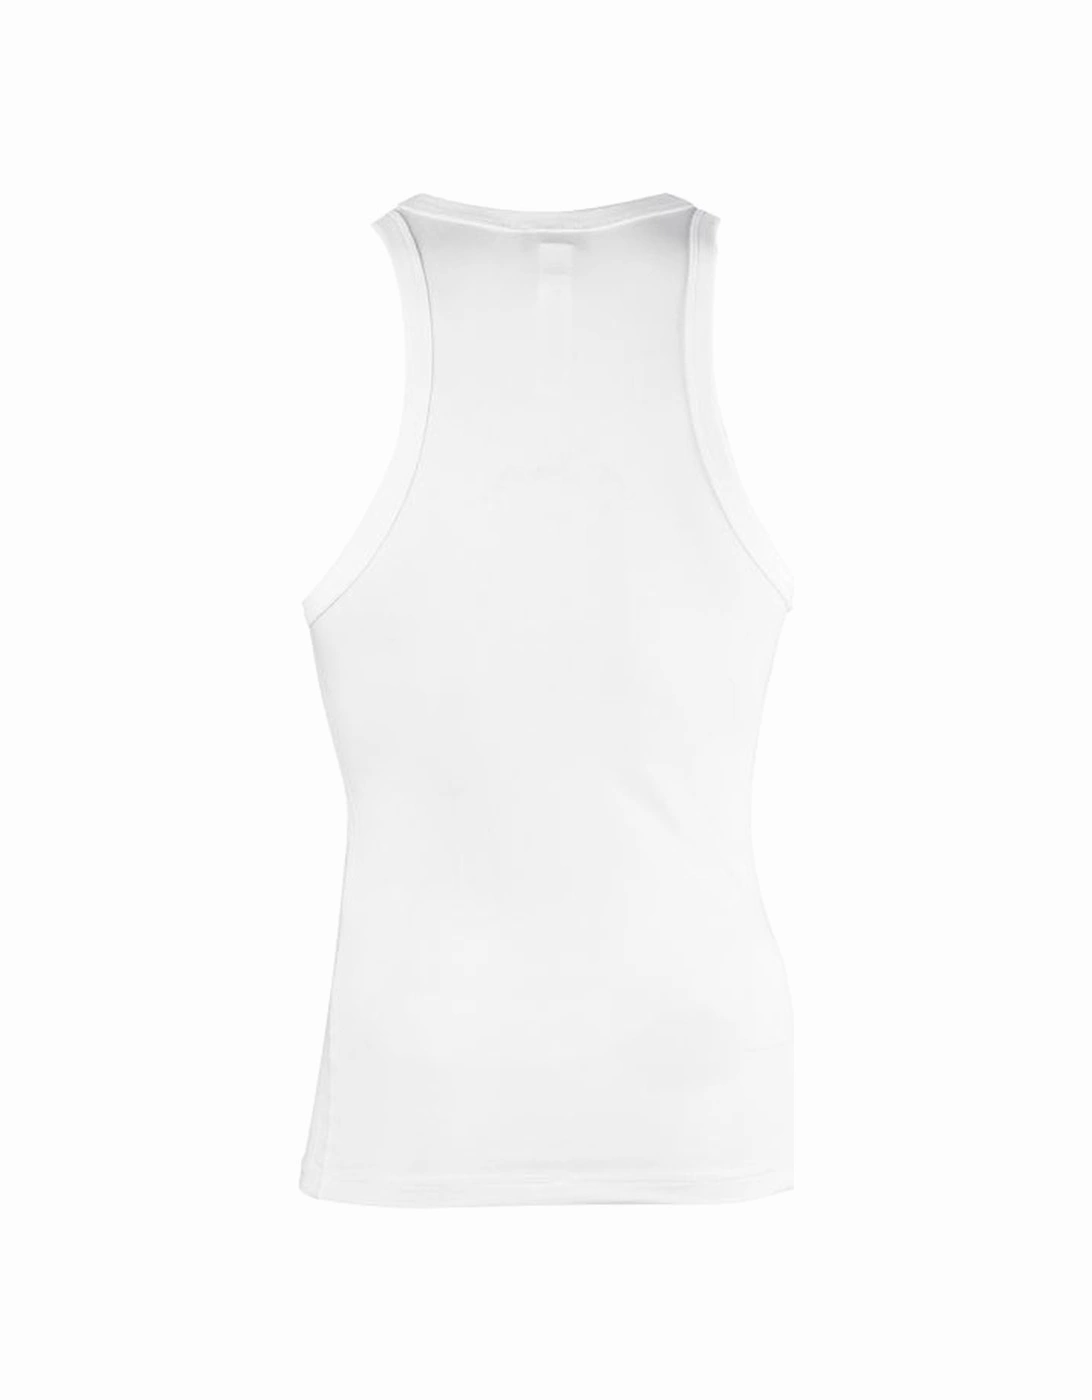 Cotton Stretch Tank Top Vest, White